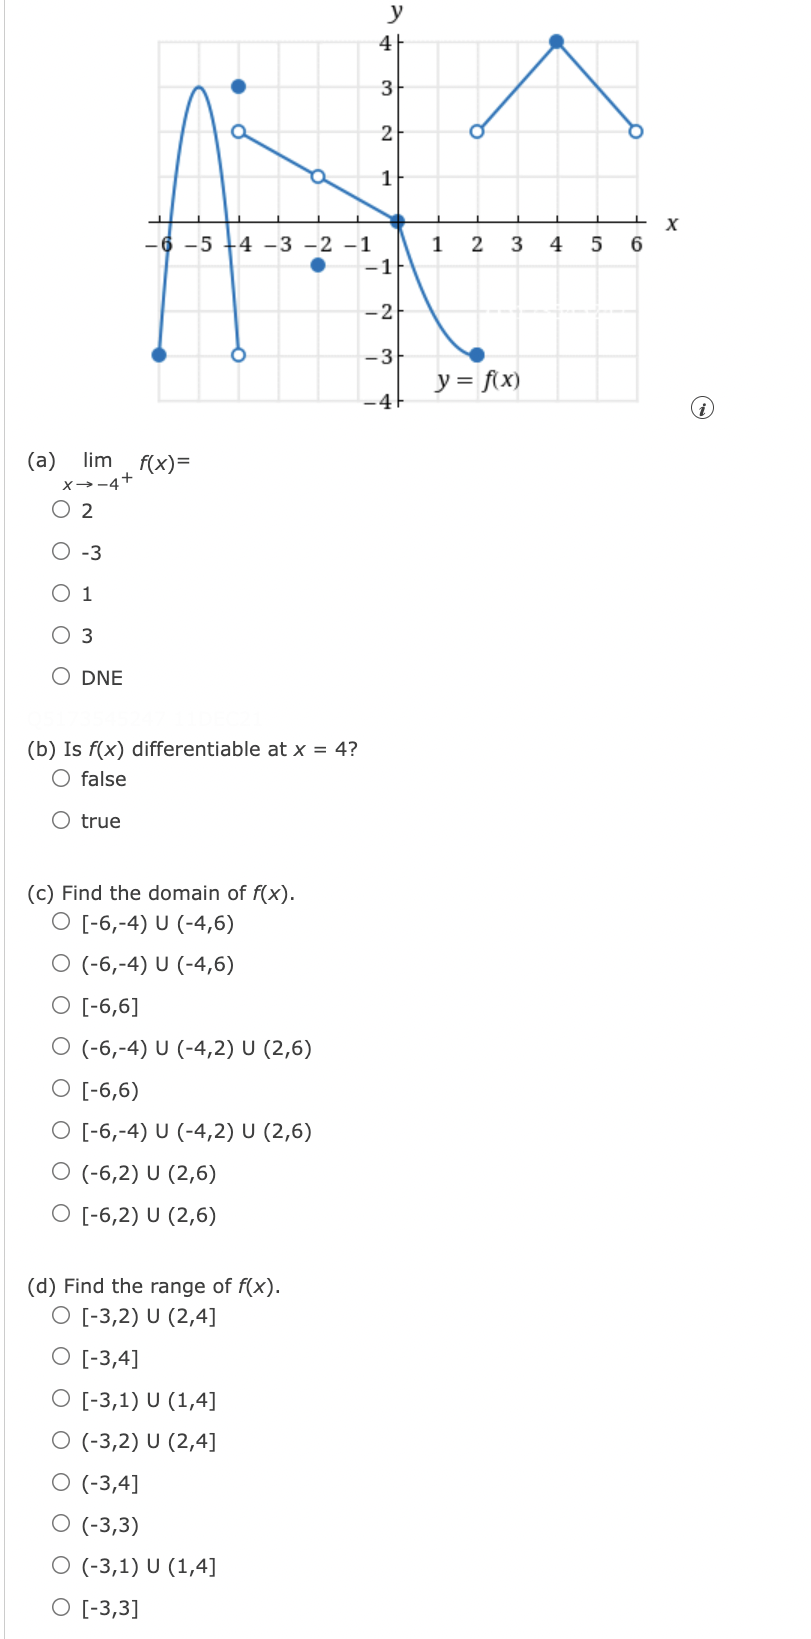 y
4
3
2
1
X
-6 -5
-4 -3 -2 -1
1
-1
2
3
4
-2
-3
y = f\x)
-41
lim f(x)=
(а)
x→-4+
O 2
O -3
О 1
O 3
O DNE
(b) Is f(x) differentiable at x = 4?
O false
O true
(c) Find the domain of f(x).
O [-6,-4) U (-4,6)
O (-6,-4) U (-4,6)
O [-6,6]
O (-6,-4) U (-4,2) U (2,6)
O [-6,6)
O [-6,-4) U (-4,2) U (2,6)
O (-6,2) U (2,6)
O [-6,2) U (2,6)
(d) Find the range of f(x).
O [-3,2) U (2,4]
O [-3,4]
O [-3,1) U (1,4]
O (-3,2) U (2,4]
O (-3,4]
О (-3,3)
O (-3,1) U (1,4]
O [-3,3]
